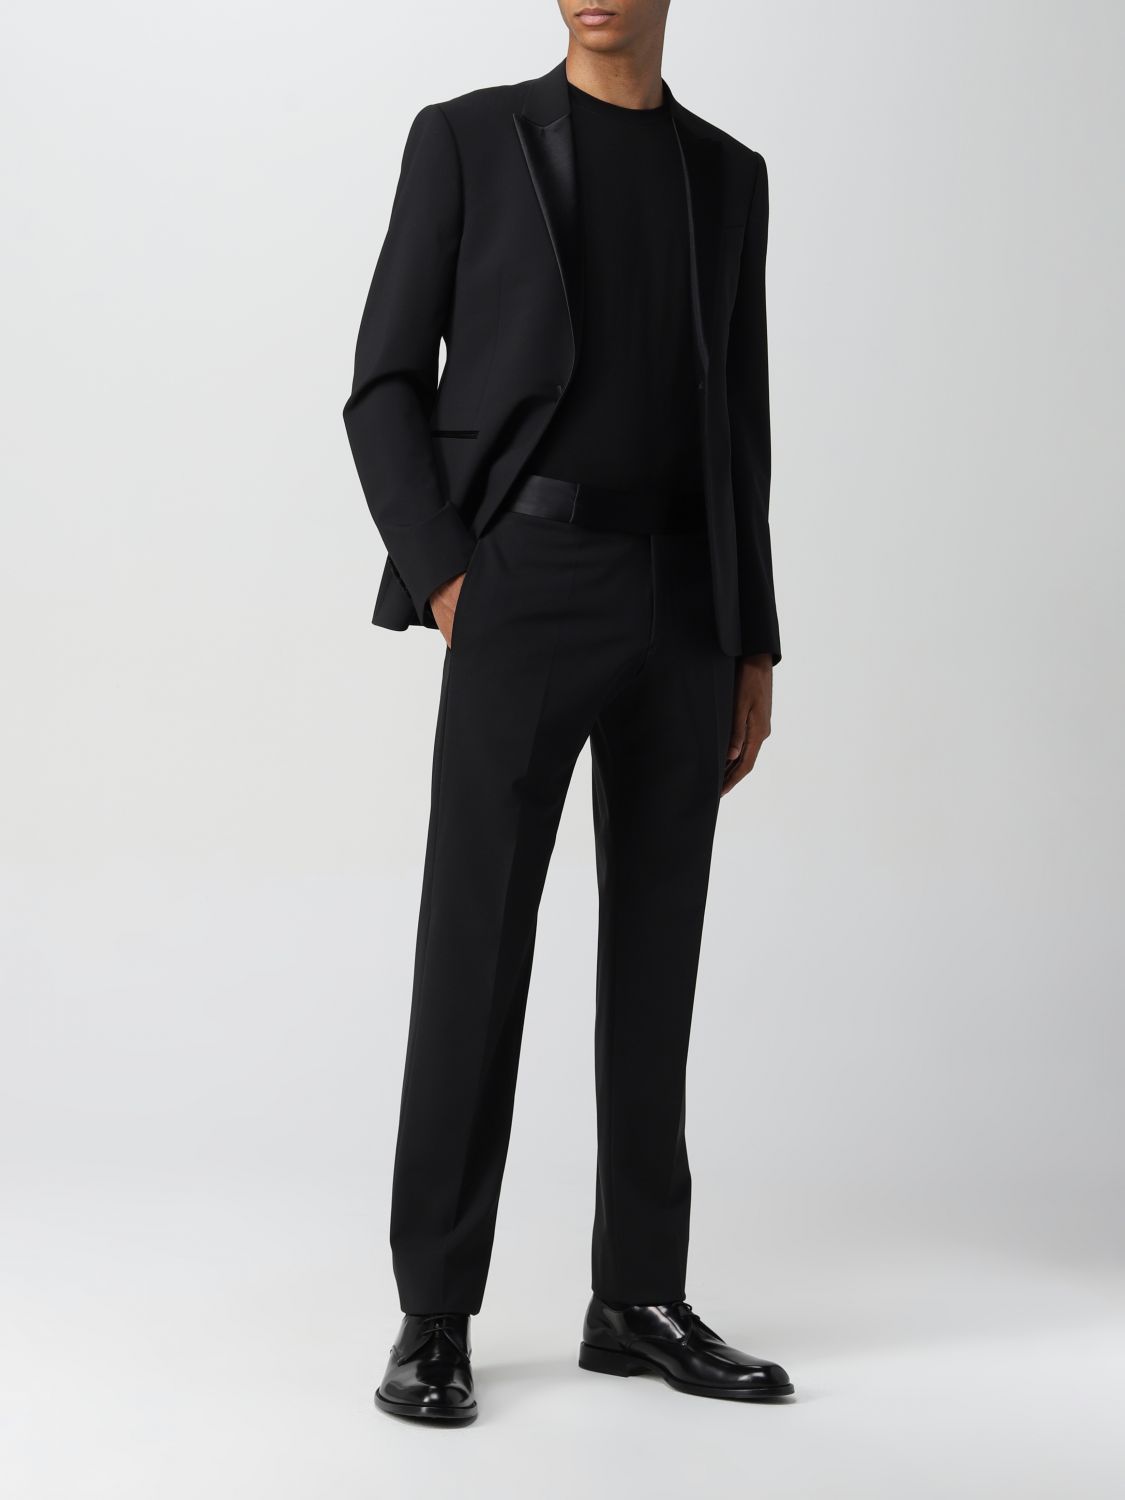 EMPORIO ARMANI: suit for men - Black | Emporio Armani suit H31VMU01506  online on 